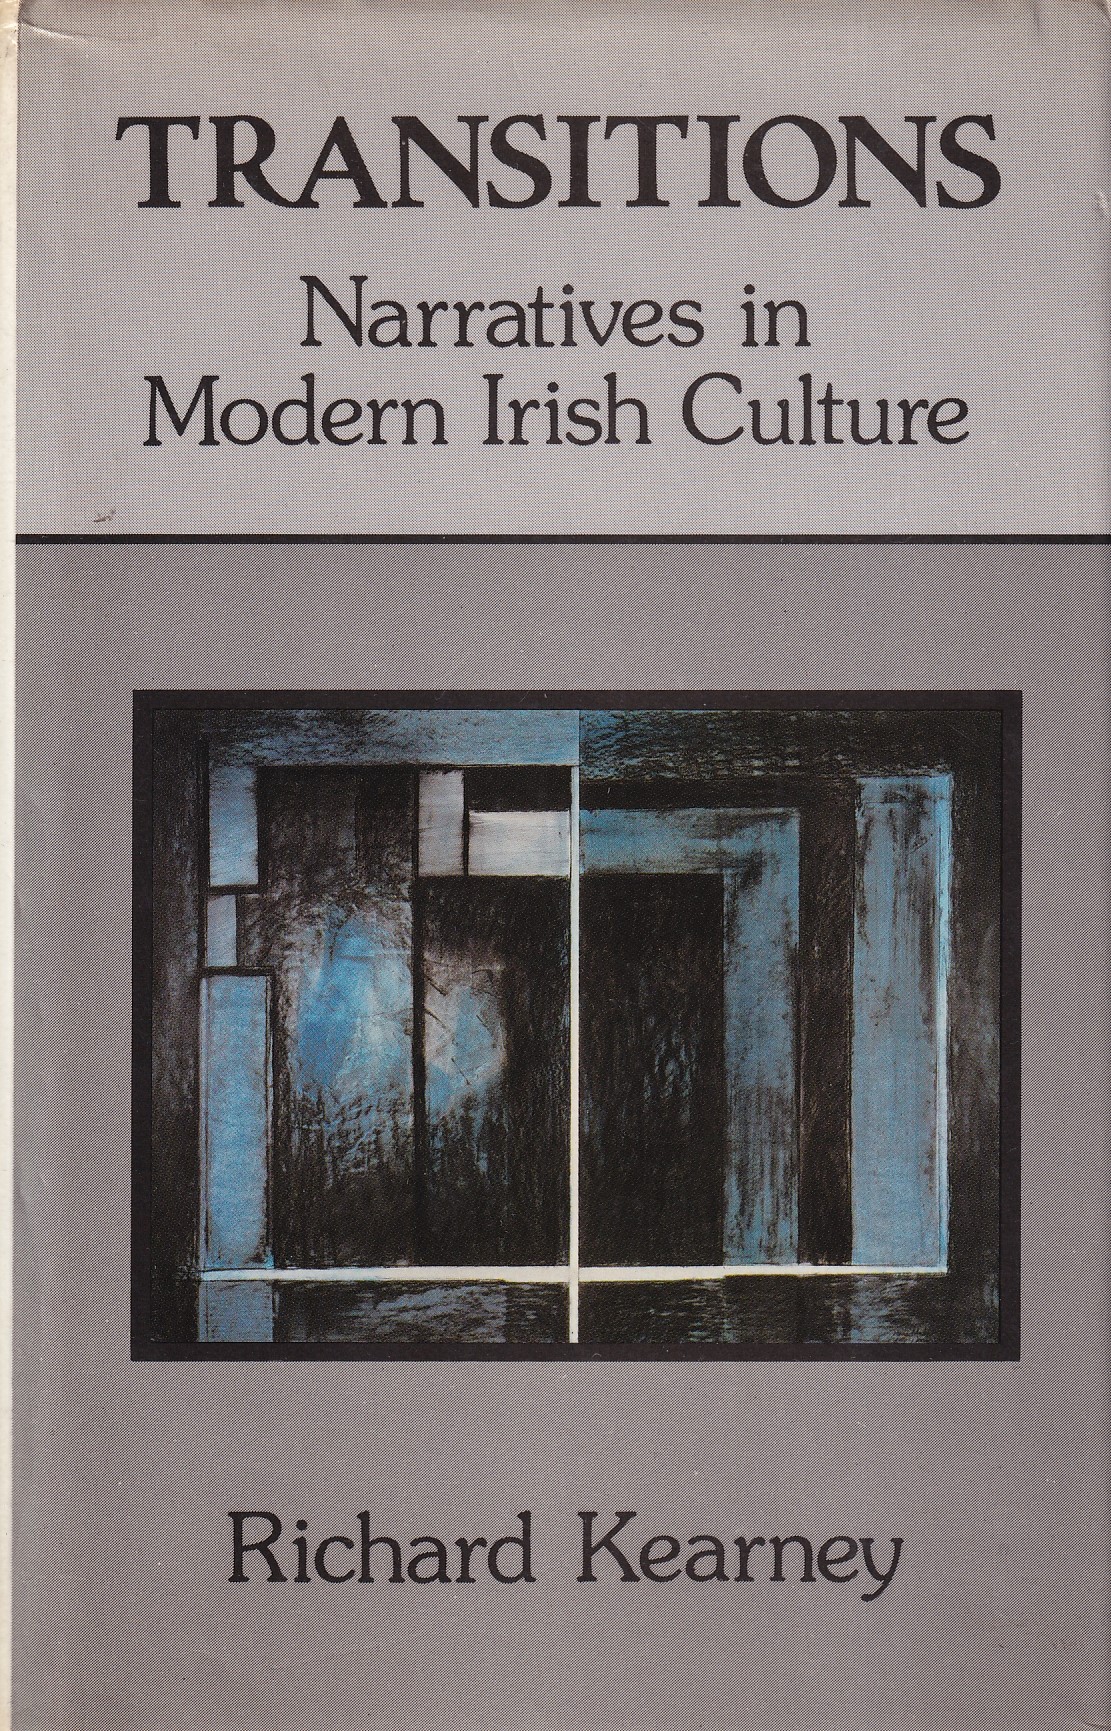 Transitions: Narratives in Modern Irish Culture by Richard Kearney